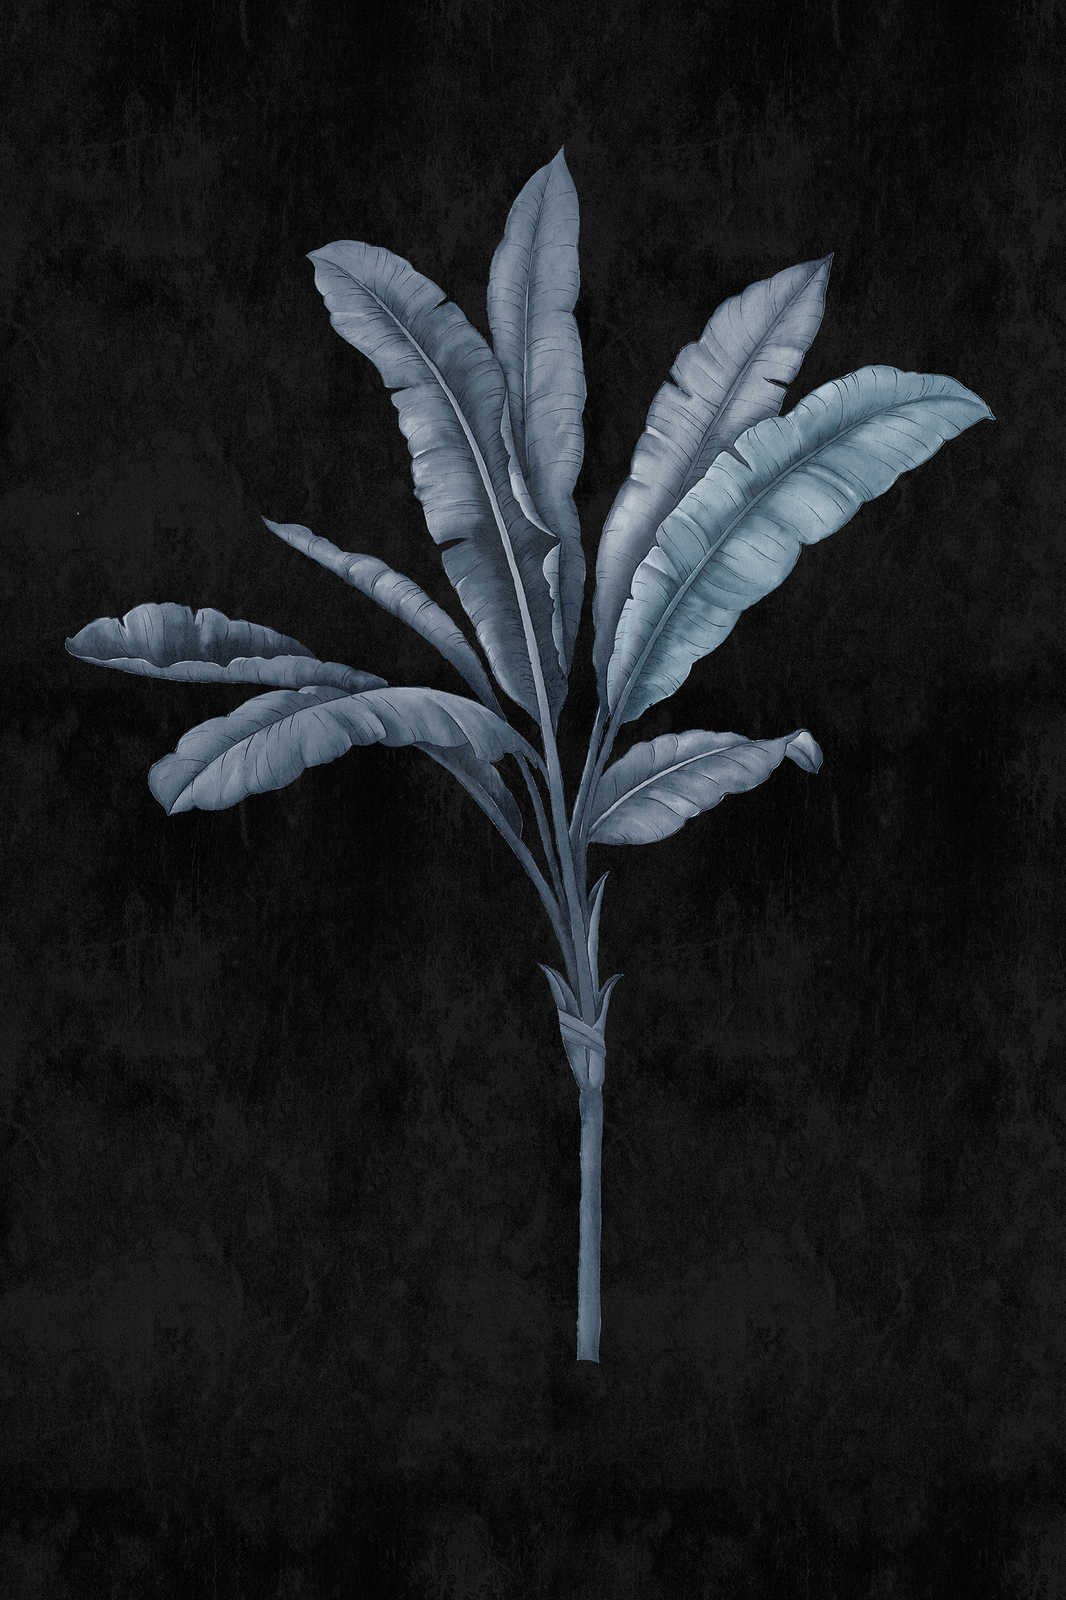             Fiji 2 - Leinwandbild Schwarz mit Blau Grauem Palmen-Motiv – 0,80 m x 1,20 m
        